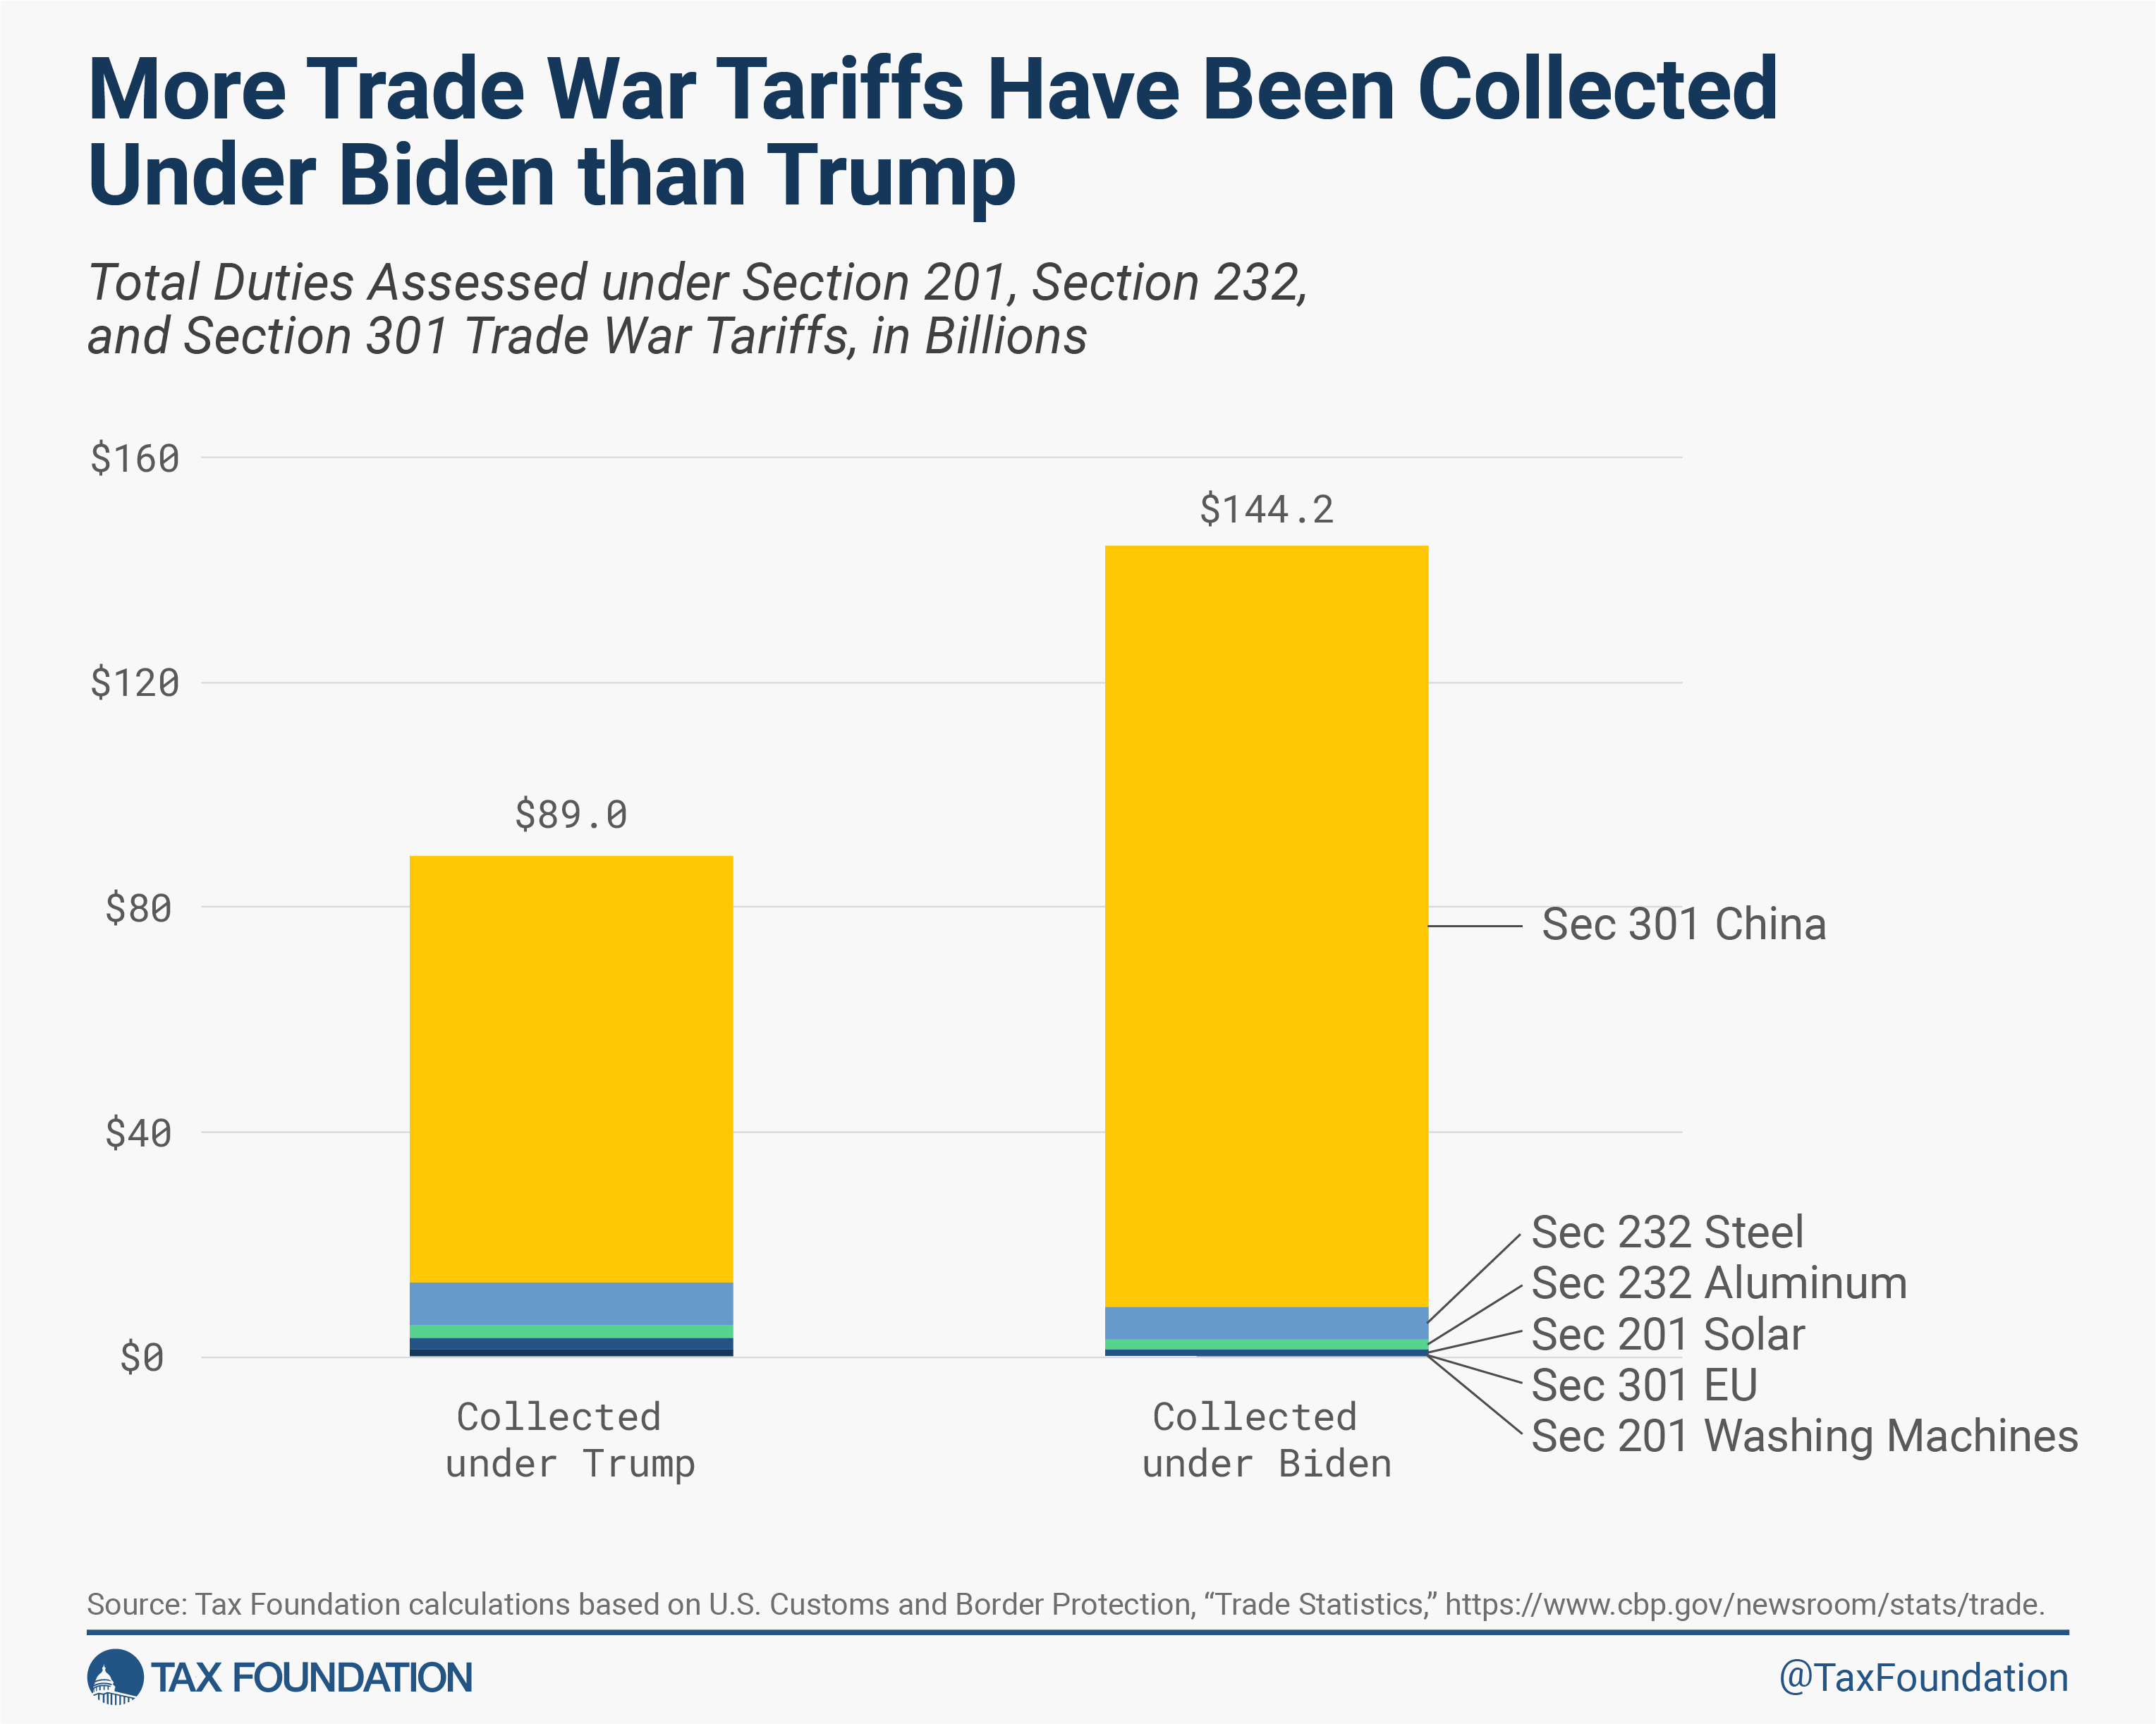 More trade war tariffs have been collected under Biden tariffs than Trump tariffs 